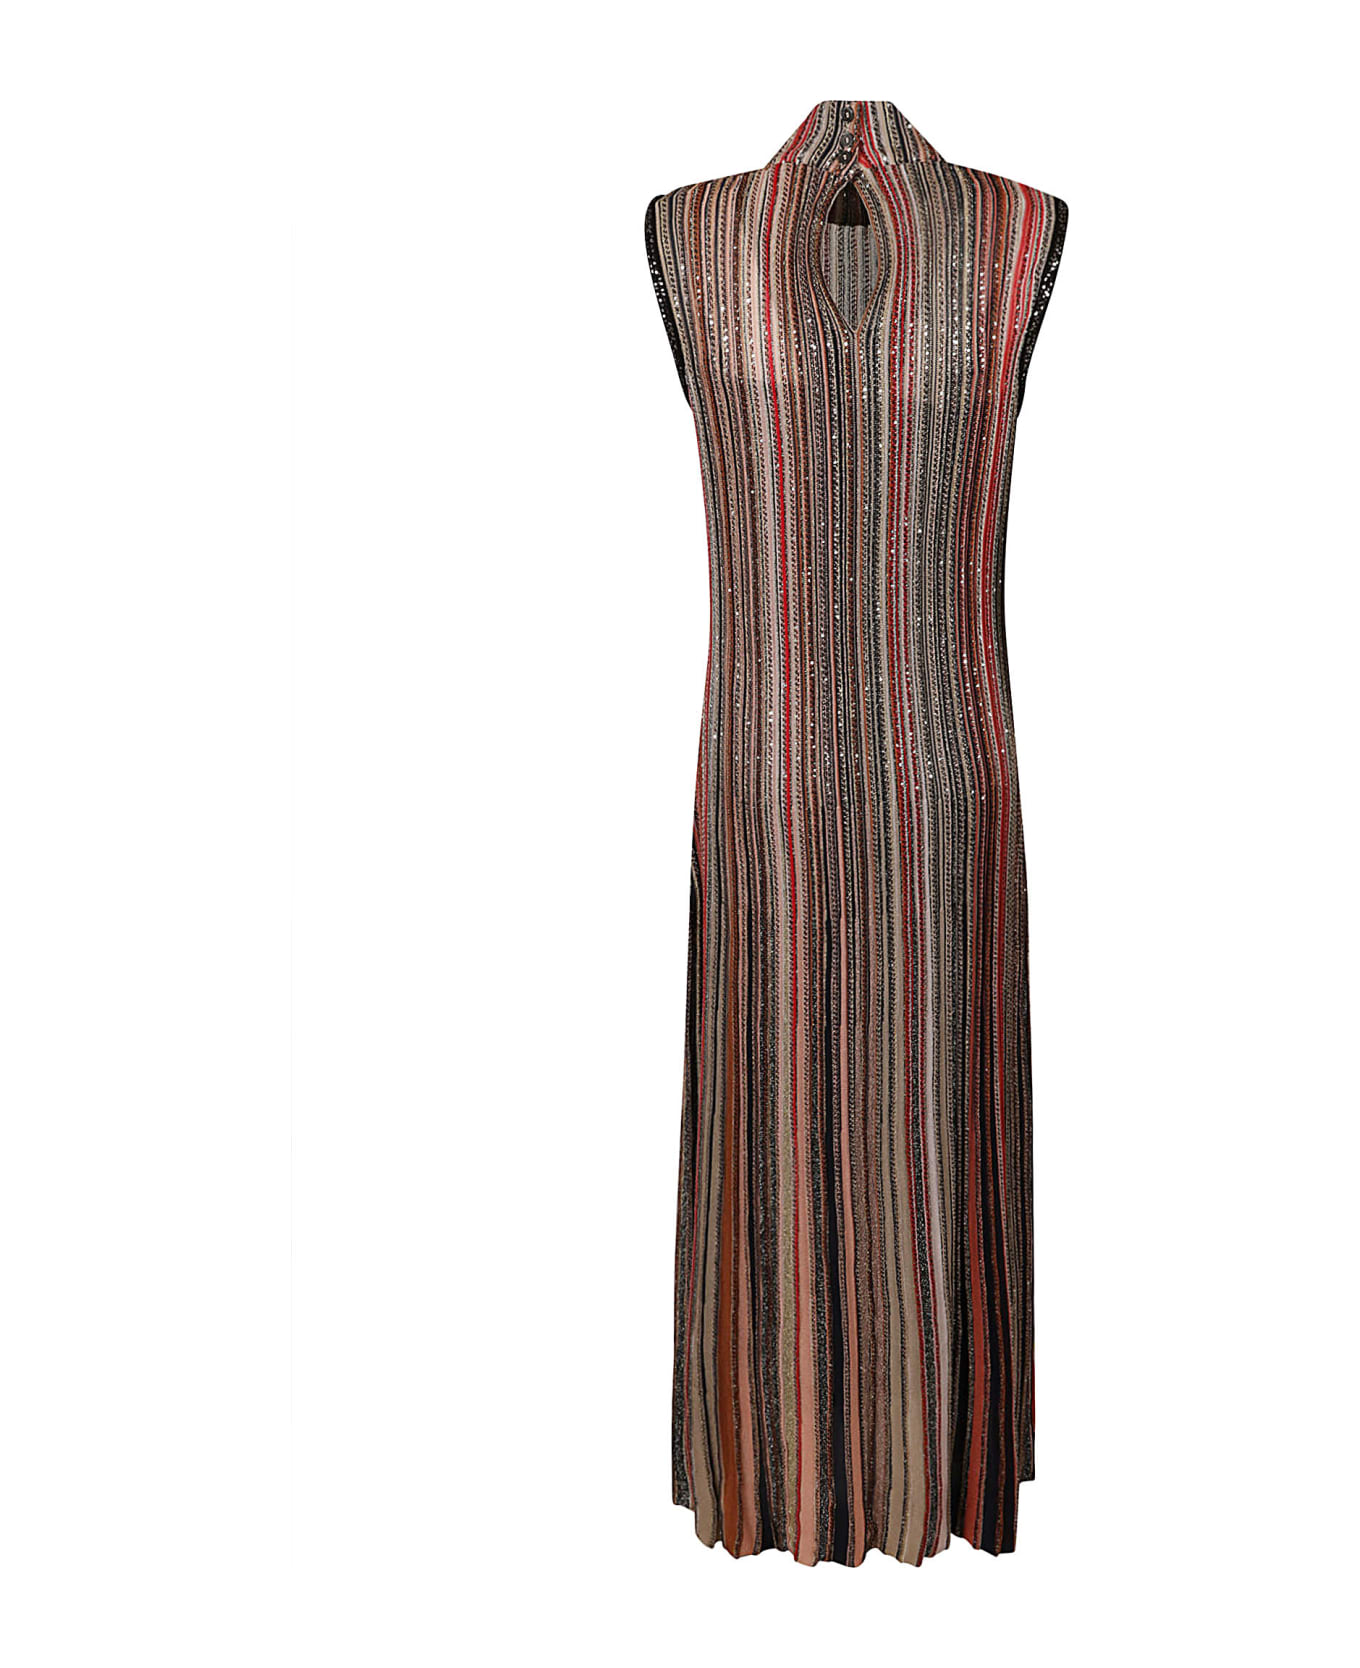 Missoni Embellished Sleeveless Stripe Dress - mult.blk/rust/bei